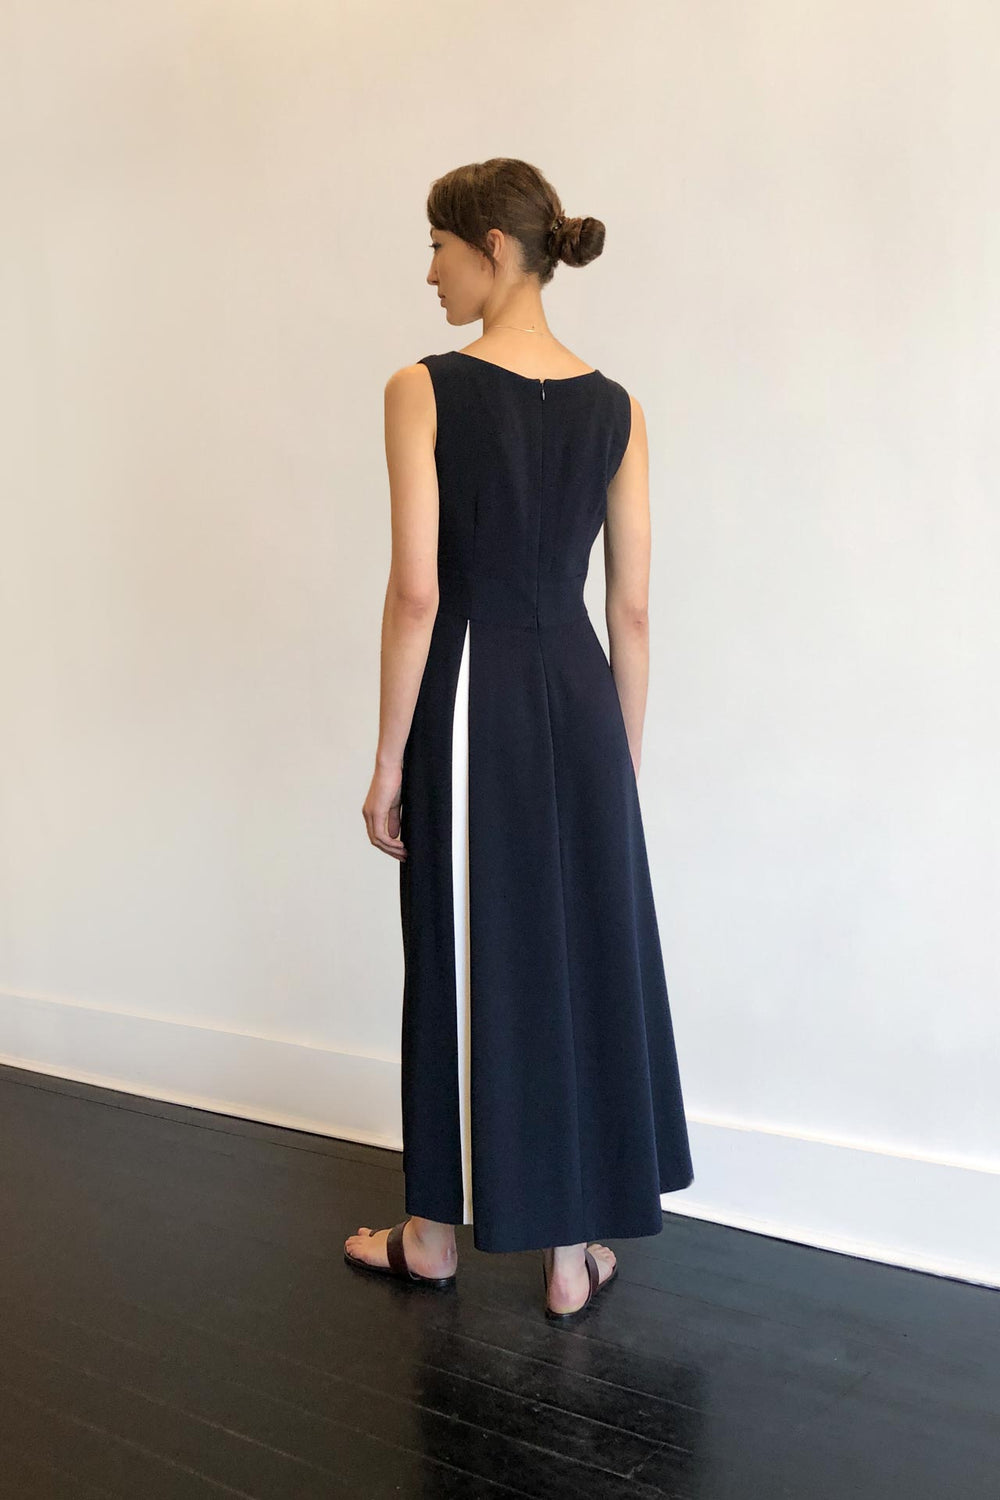 Fashion Designer CARL KAPP collection | Bella Dress Navy | Sydney Australia